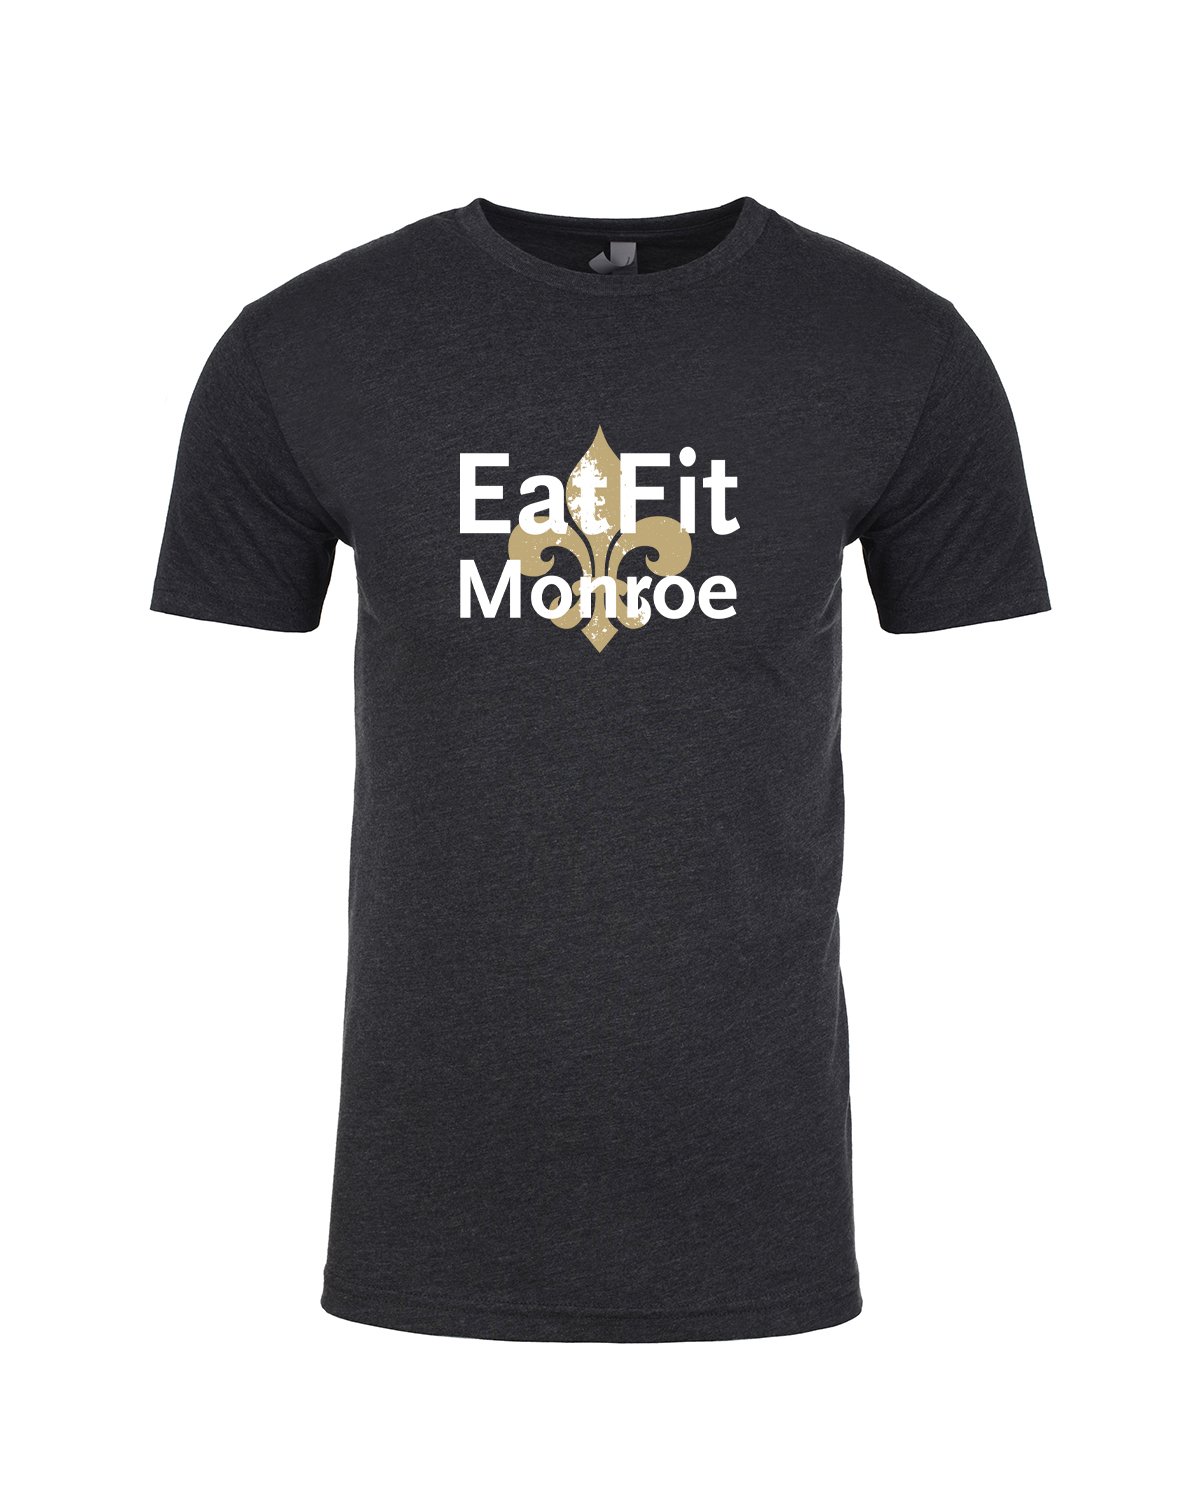 Eat Fit Monroe Unisex Crew Neck T-Shirt, , large image number 1